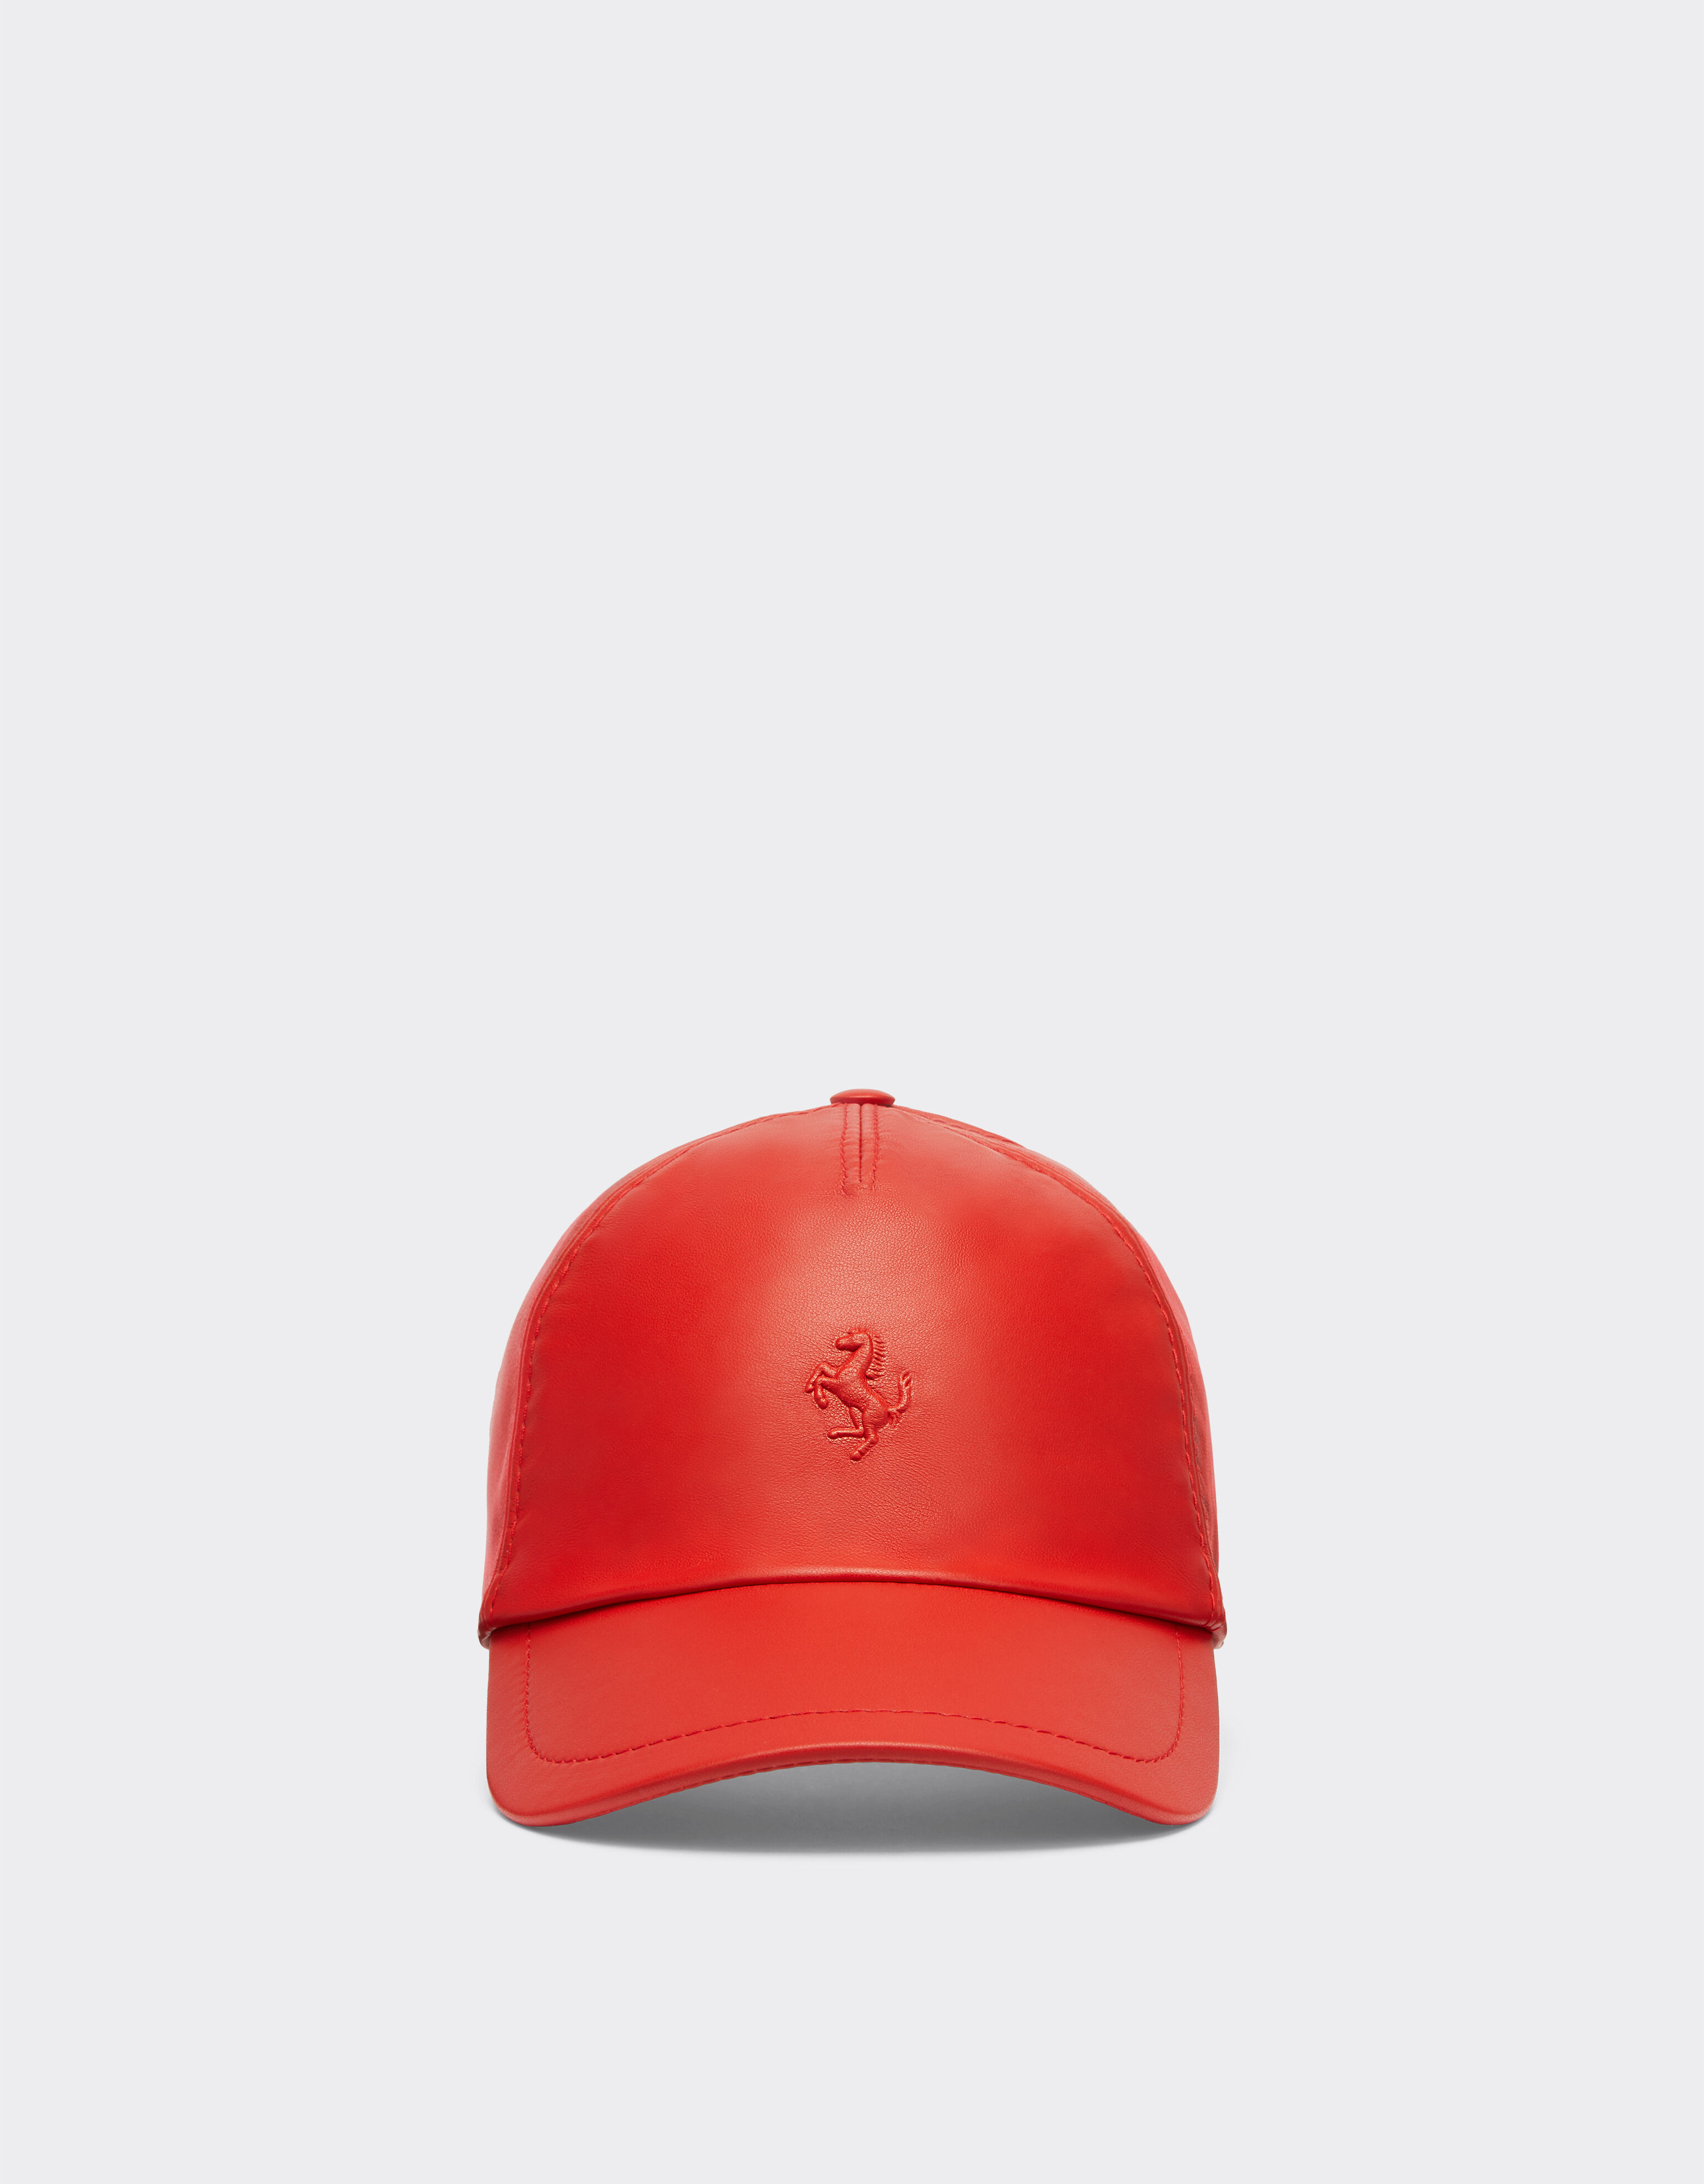 Ferrari Baseball cap with Prancing Horse logo Rosso Corsa 20264f